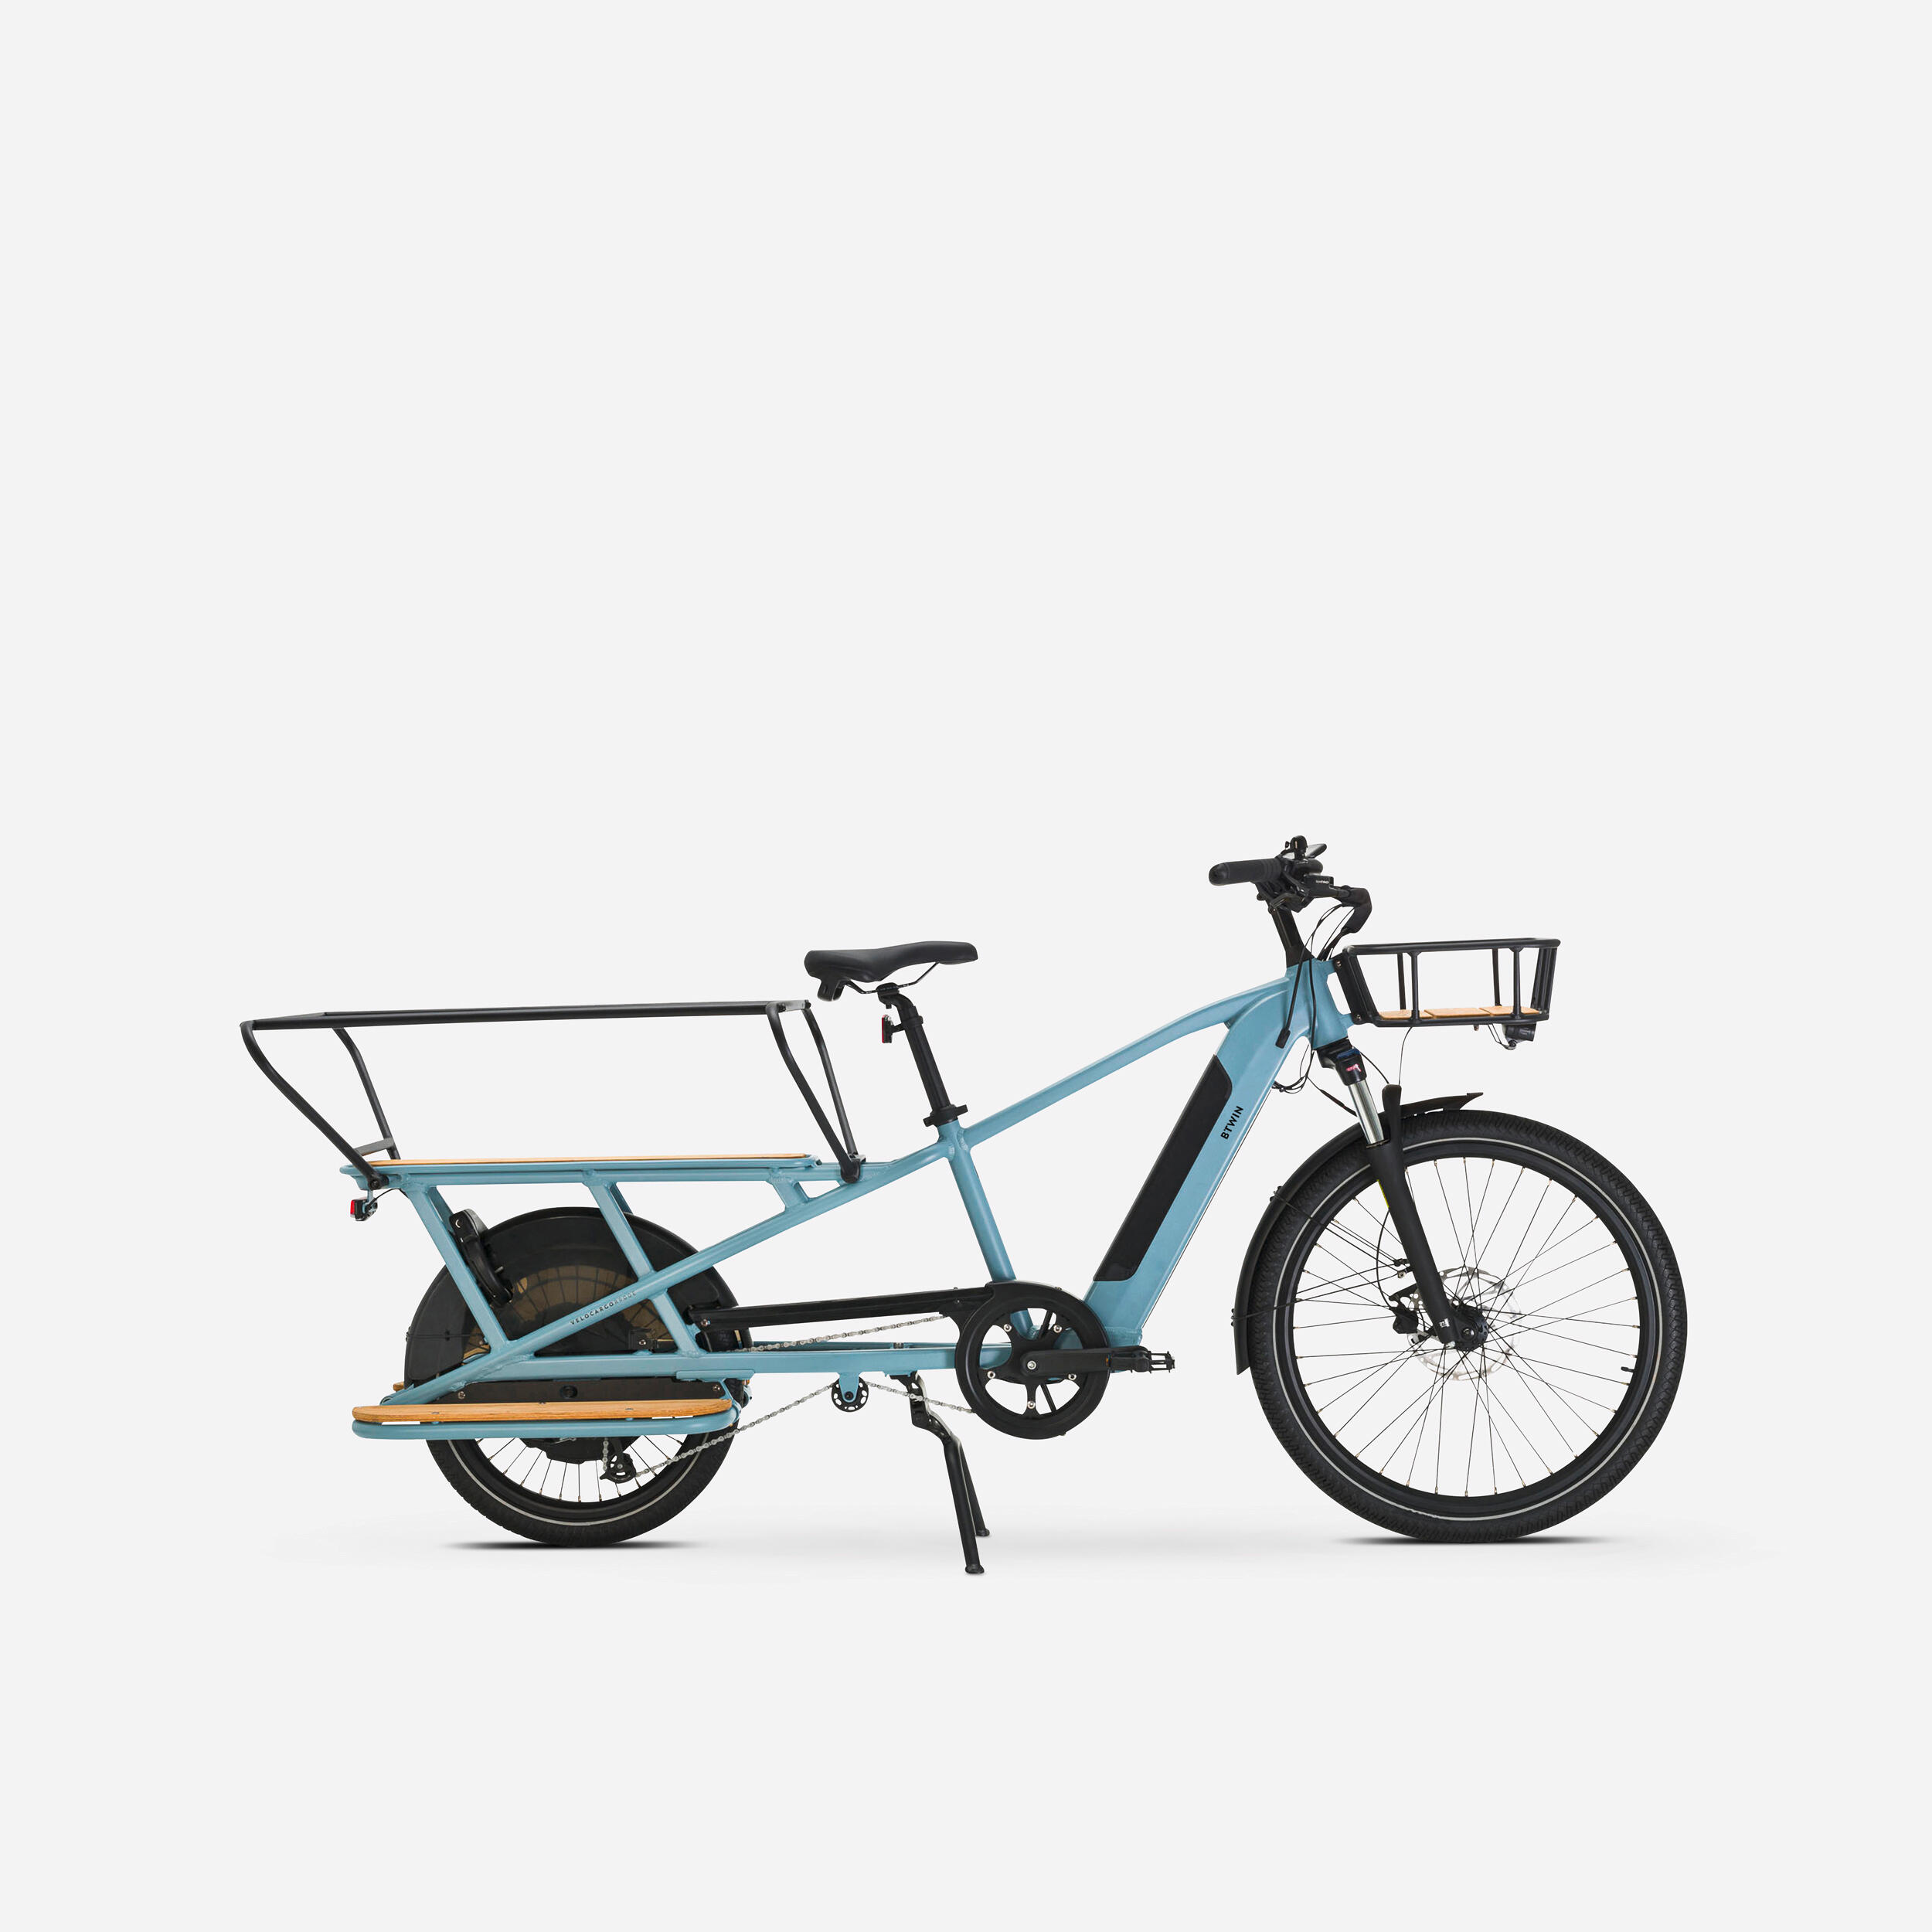 Decathlon | Bici cargo elettrica LONGTAIL R500 |  Elops